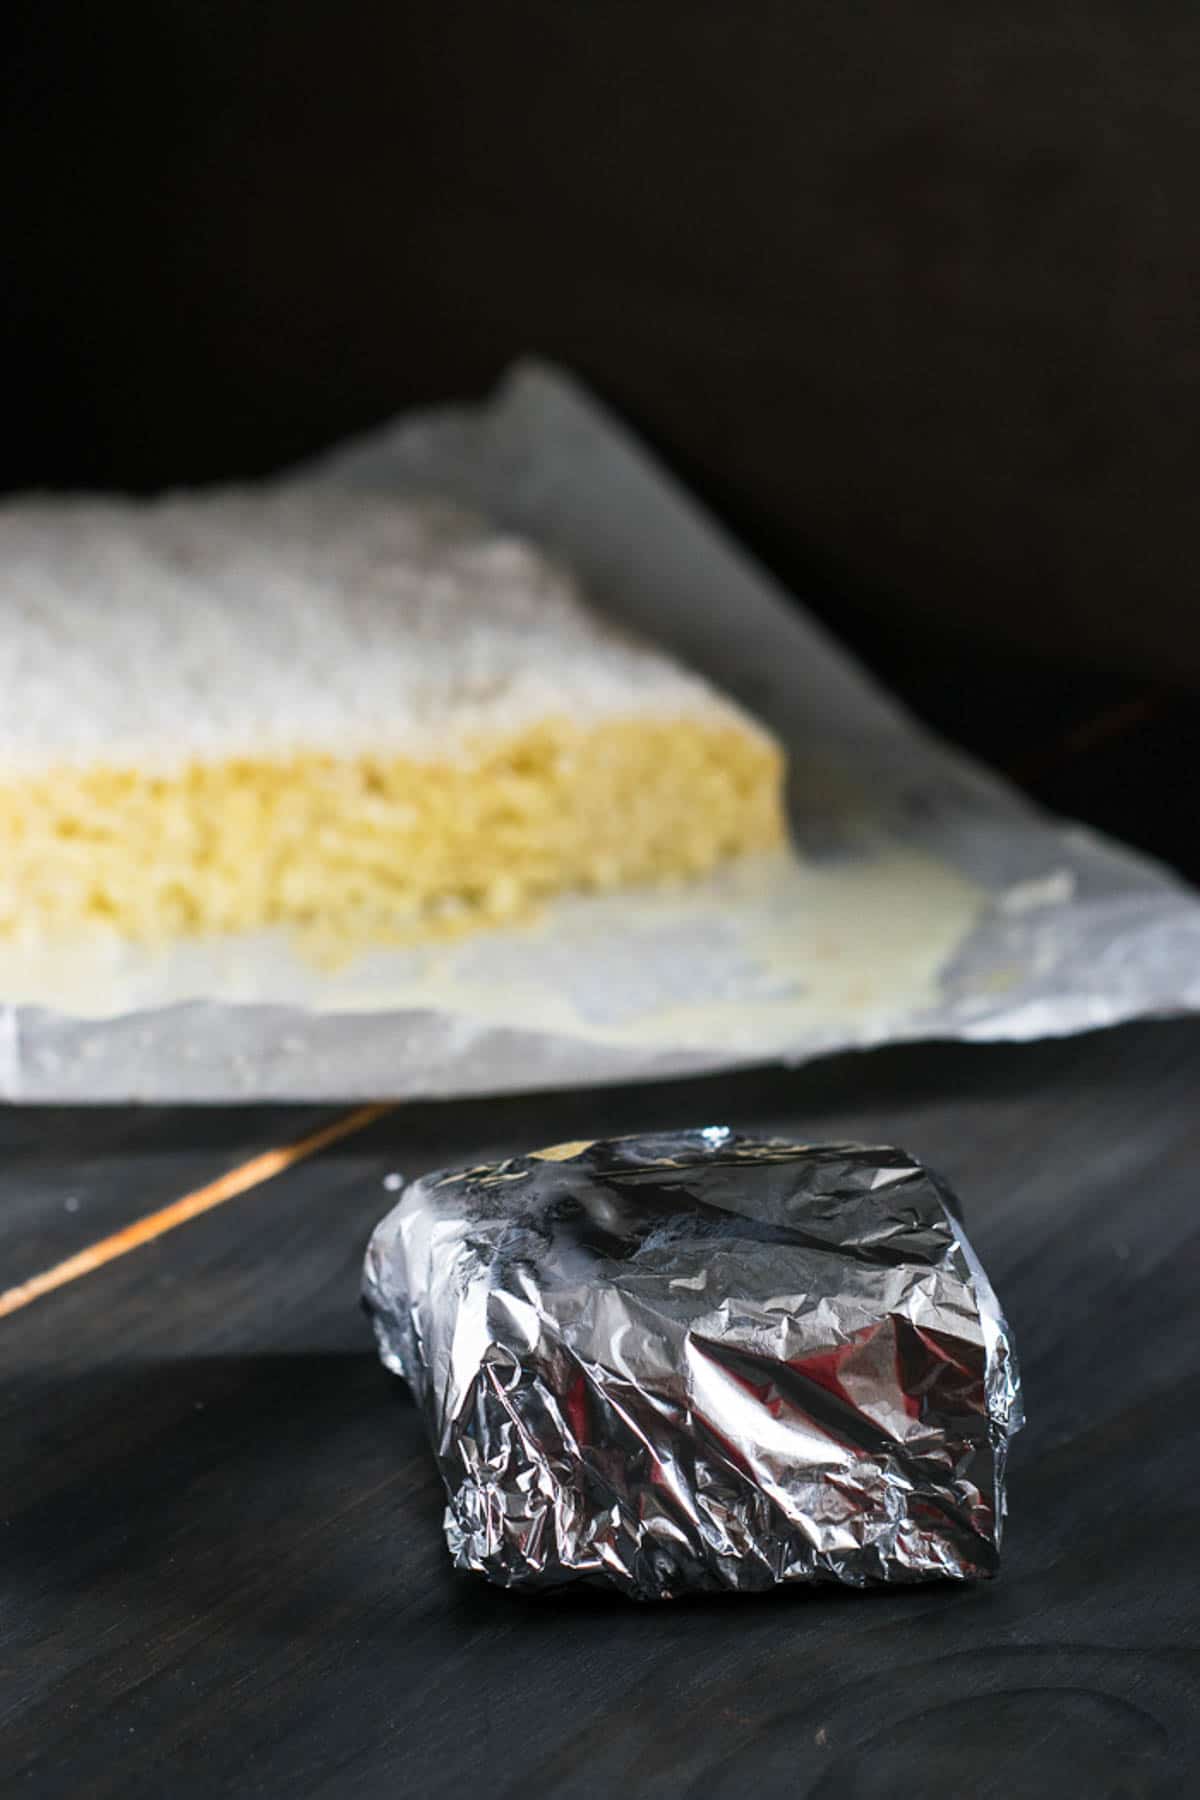 Brazilian Cold Coconut Cake wrapped in foil